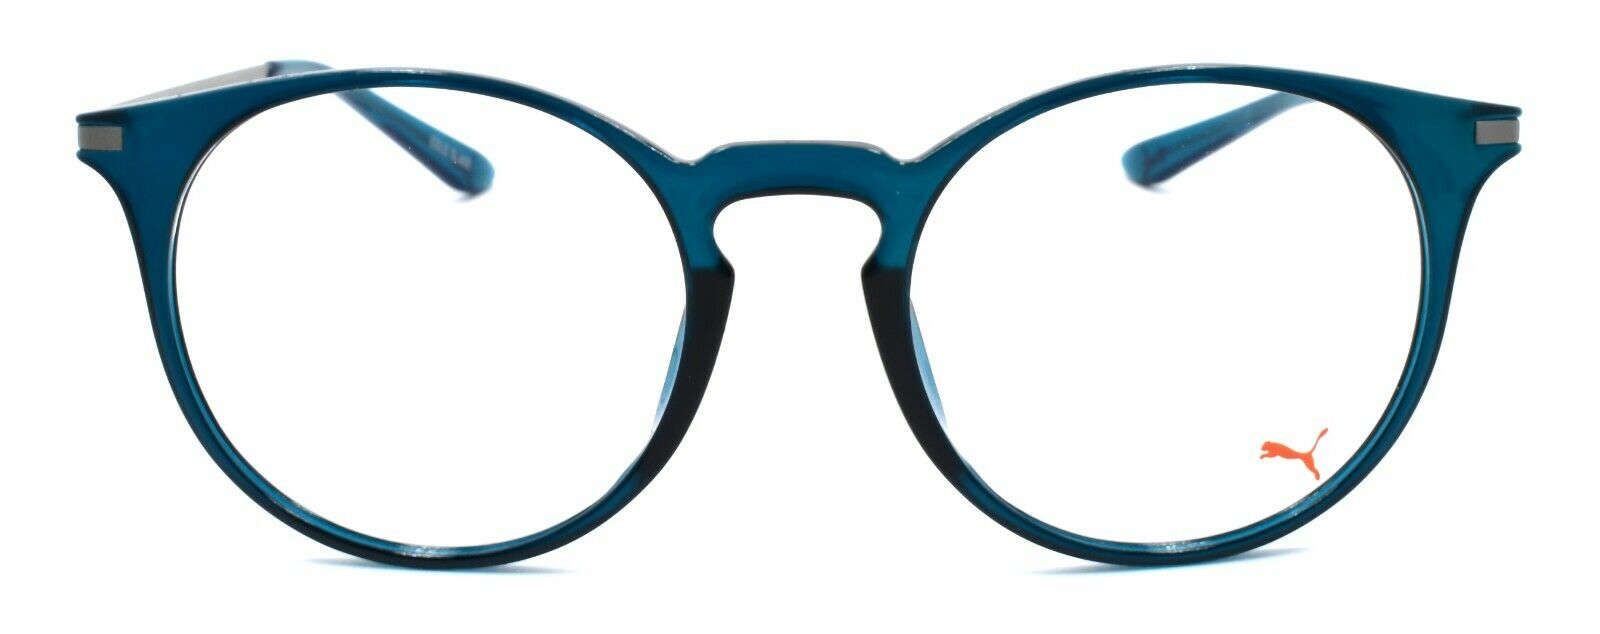 2-PUMA PU0116OA 003 Eyeglasses Frames Round 50-19-145 Green / Silver-889652063829-IKSpecs